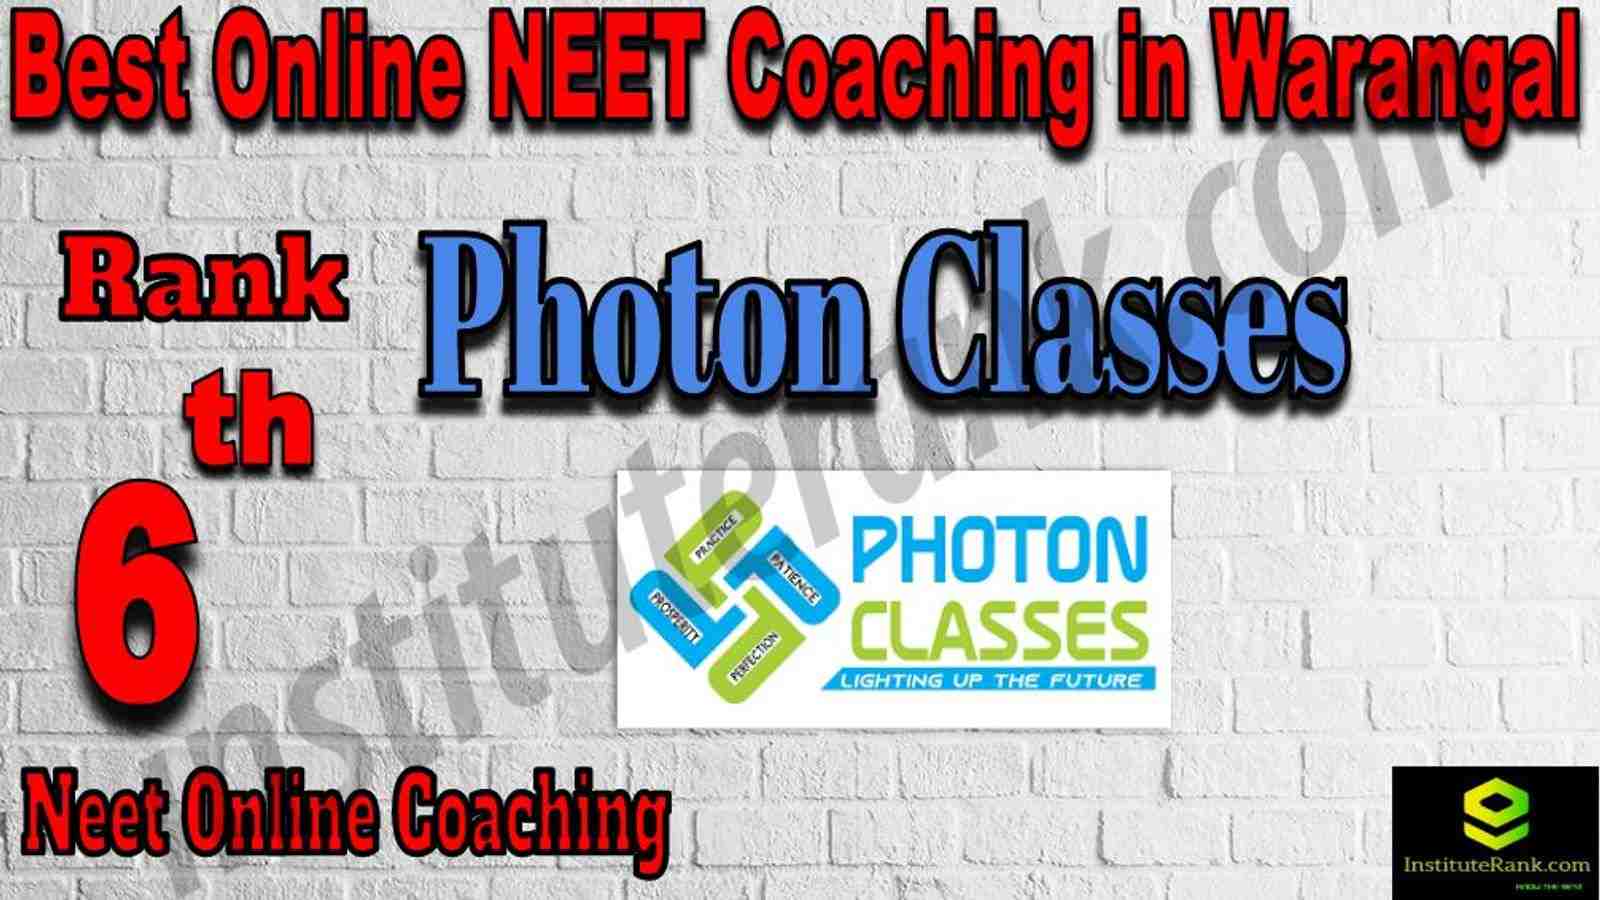 6th Best Online Neet Coaching in Warangal